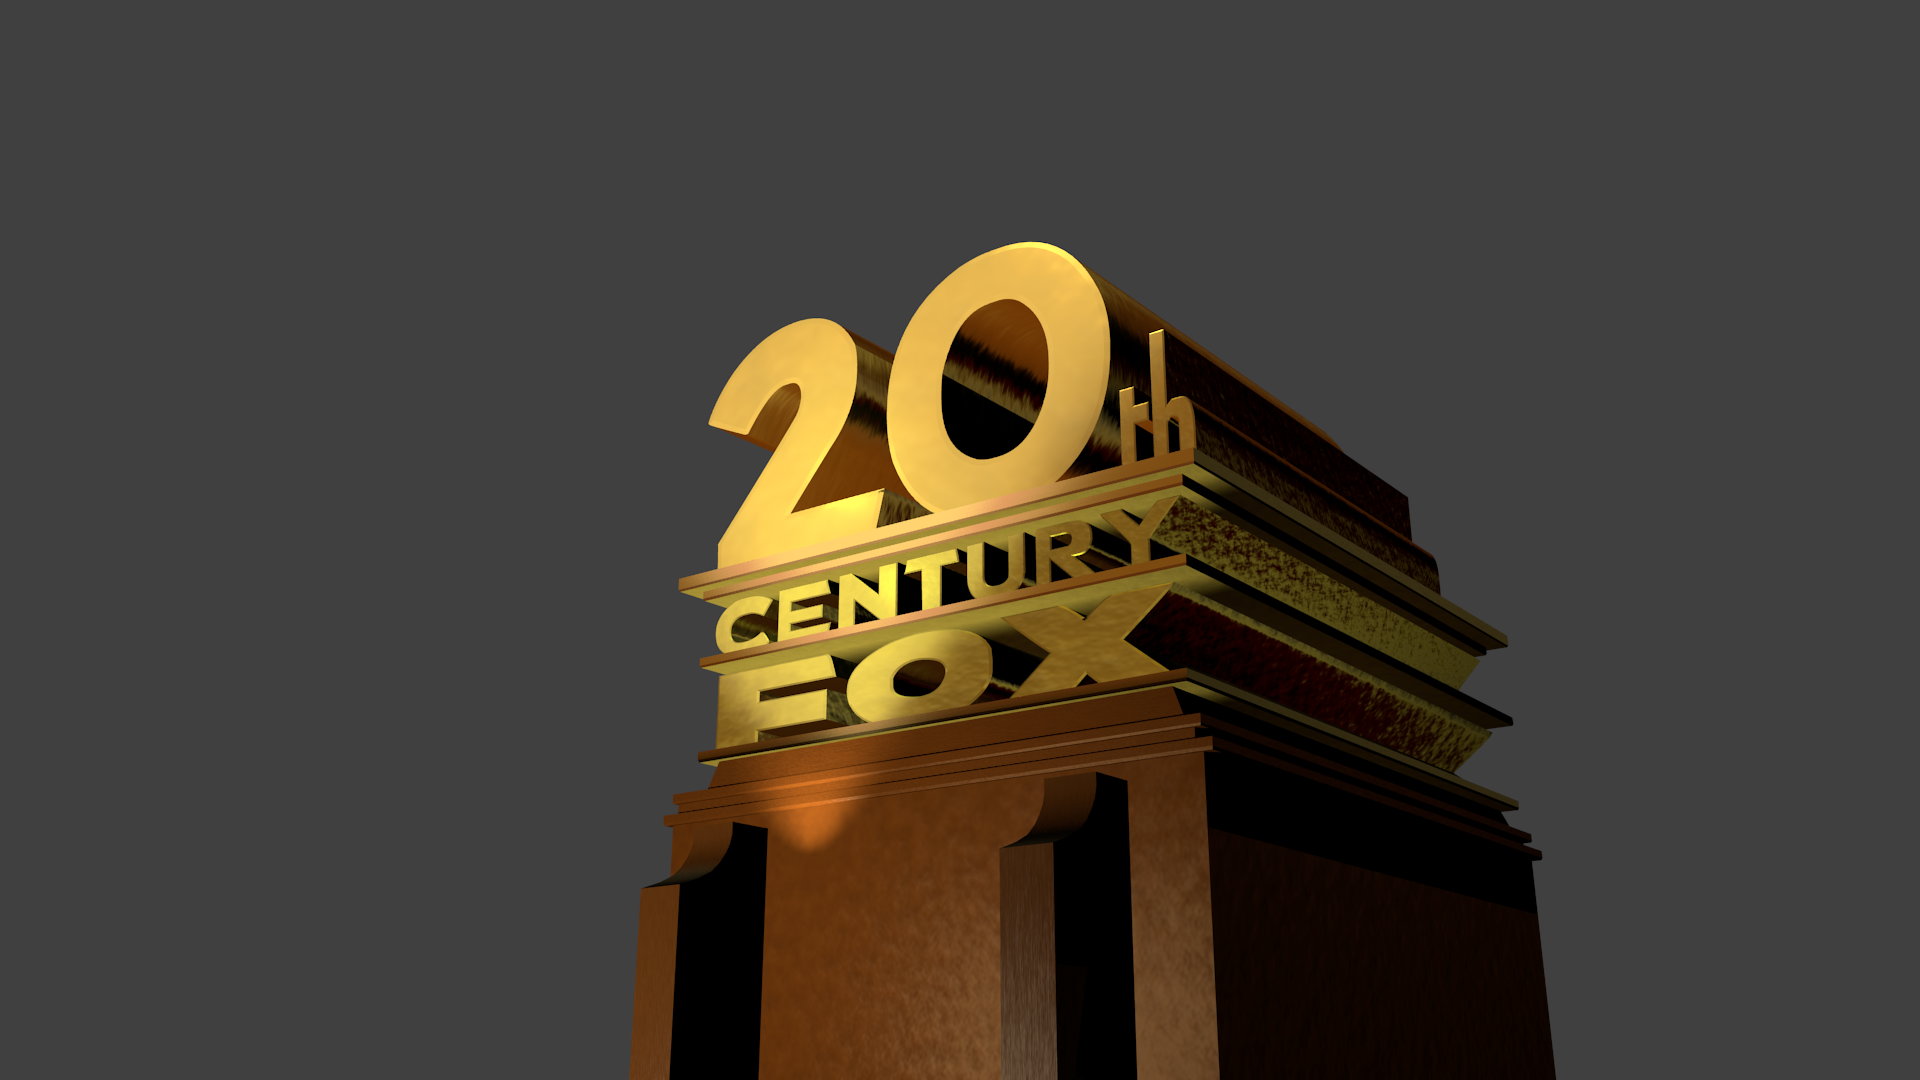 20 Век Центури Фокс. Киностудия 20 век Фокс. 20th Century Fox создатель. 20th Century Fox logo. Th fox